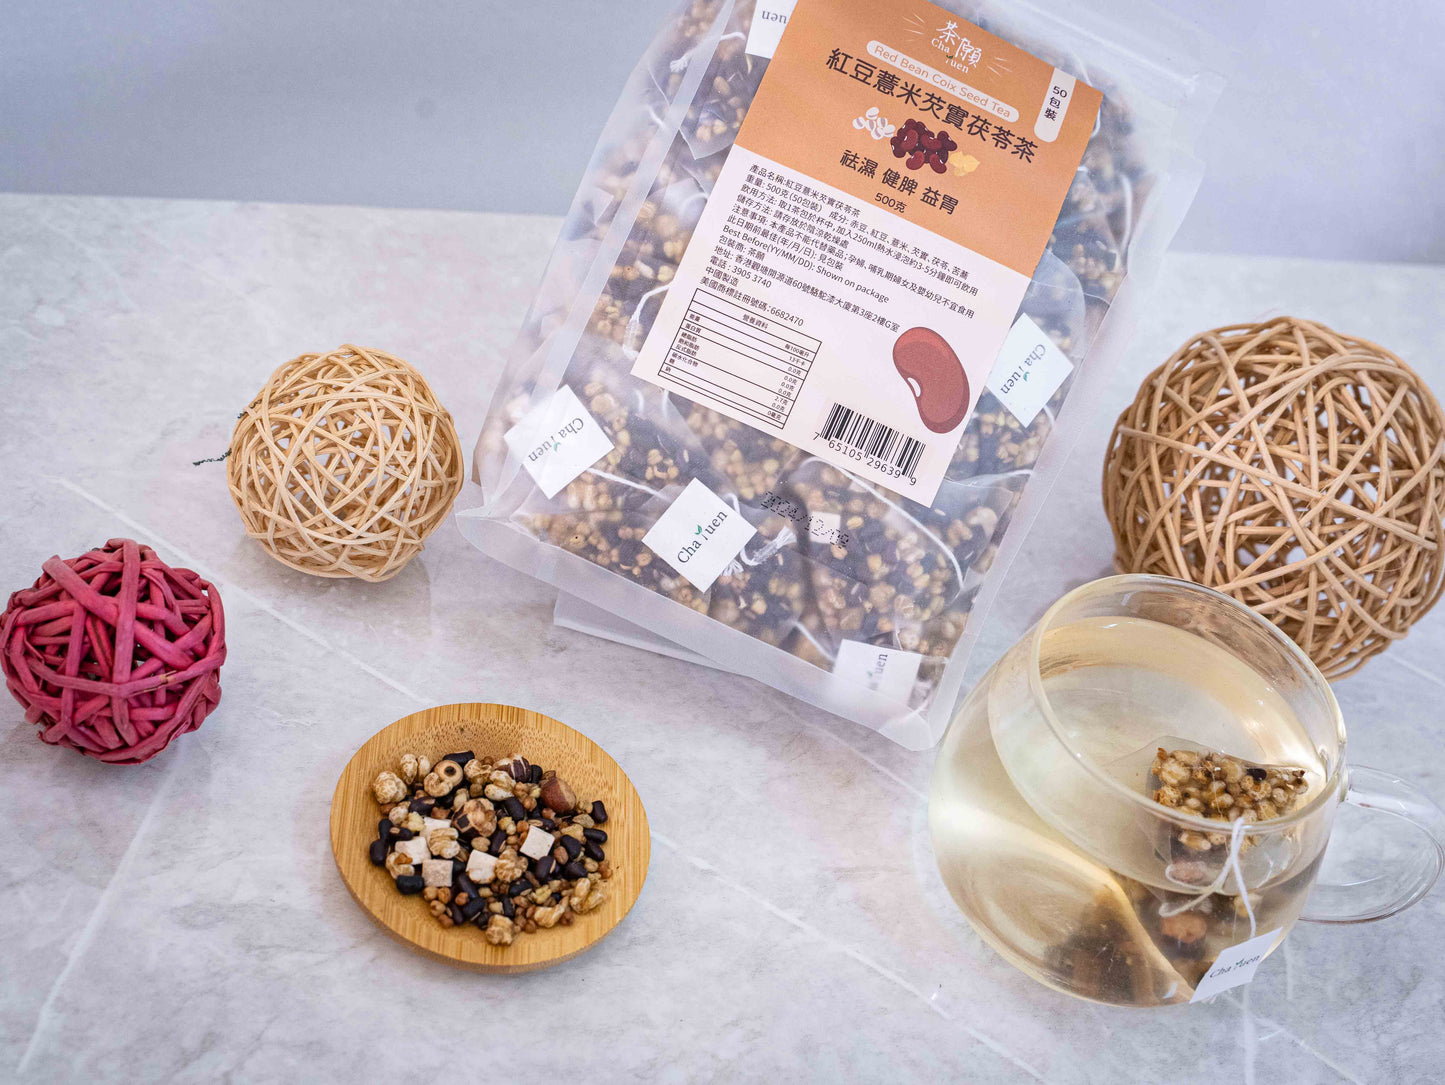 Cha Yuen – 50pcs Red Bean Coix Seed Tea Dewetting Herbal Tea Bags Nurture your spirit and help you sleep